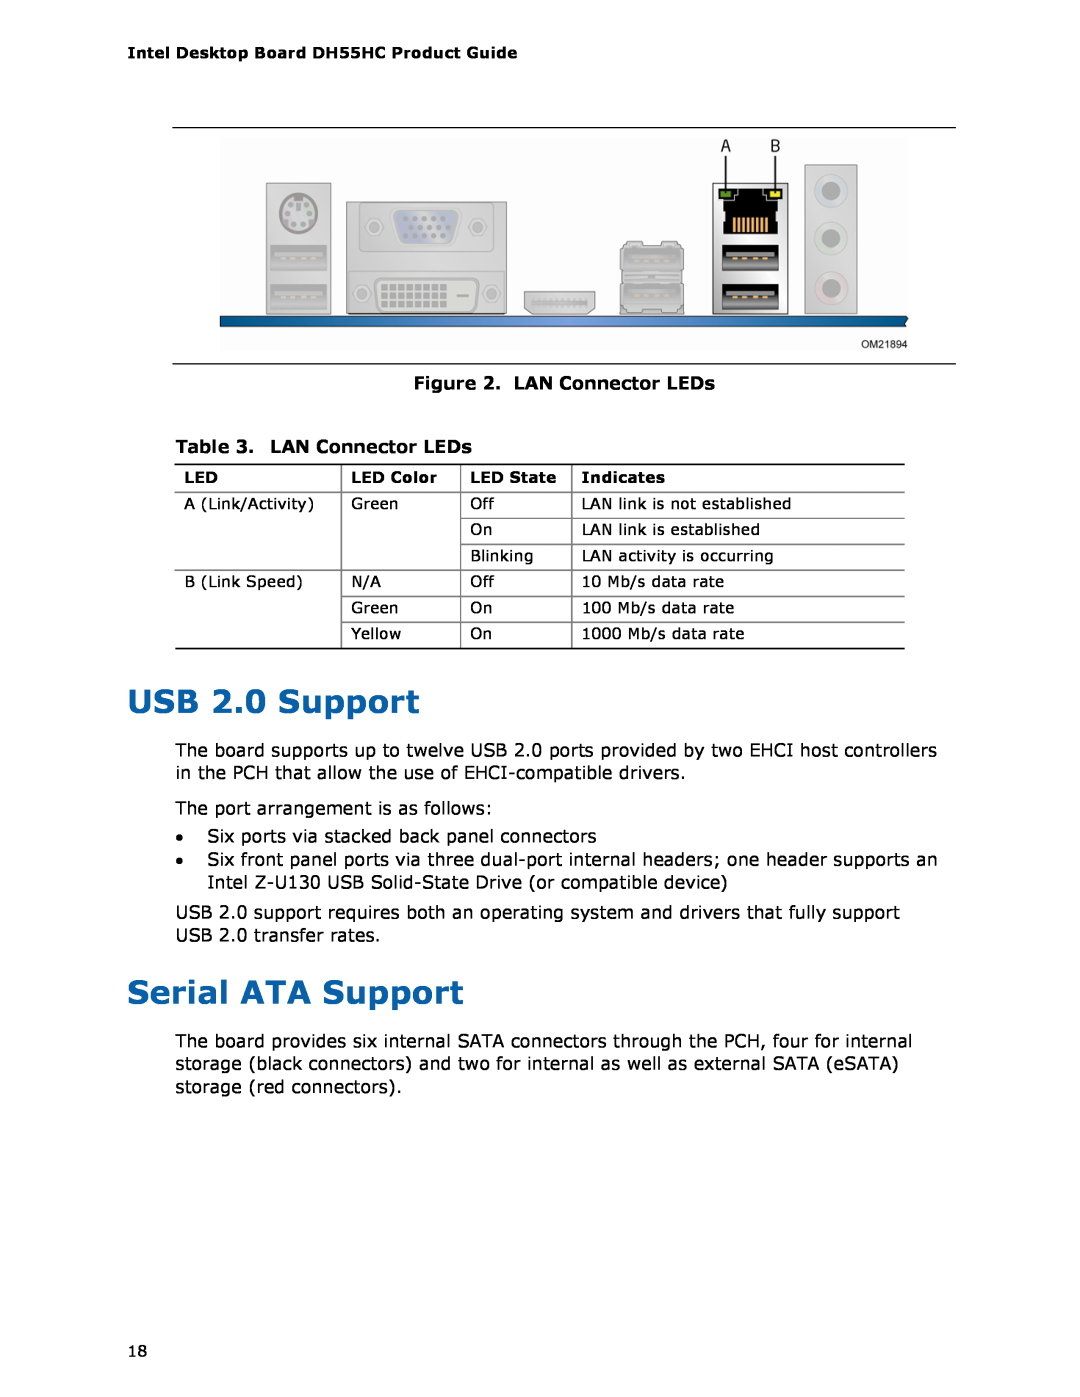 Intel BOXDH55HC manual USB 2.0 Support, Serial ATA Support, LAN Connector LEDs . LAN Connector LEDs 